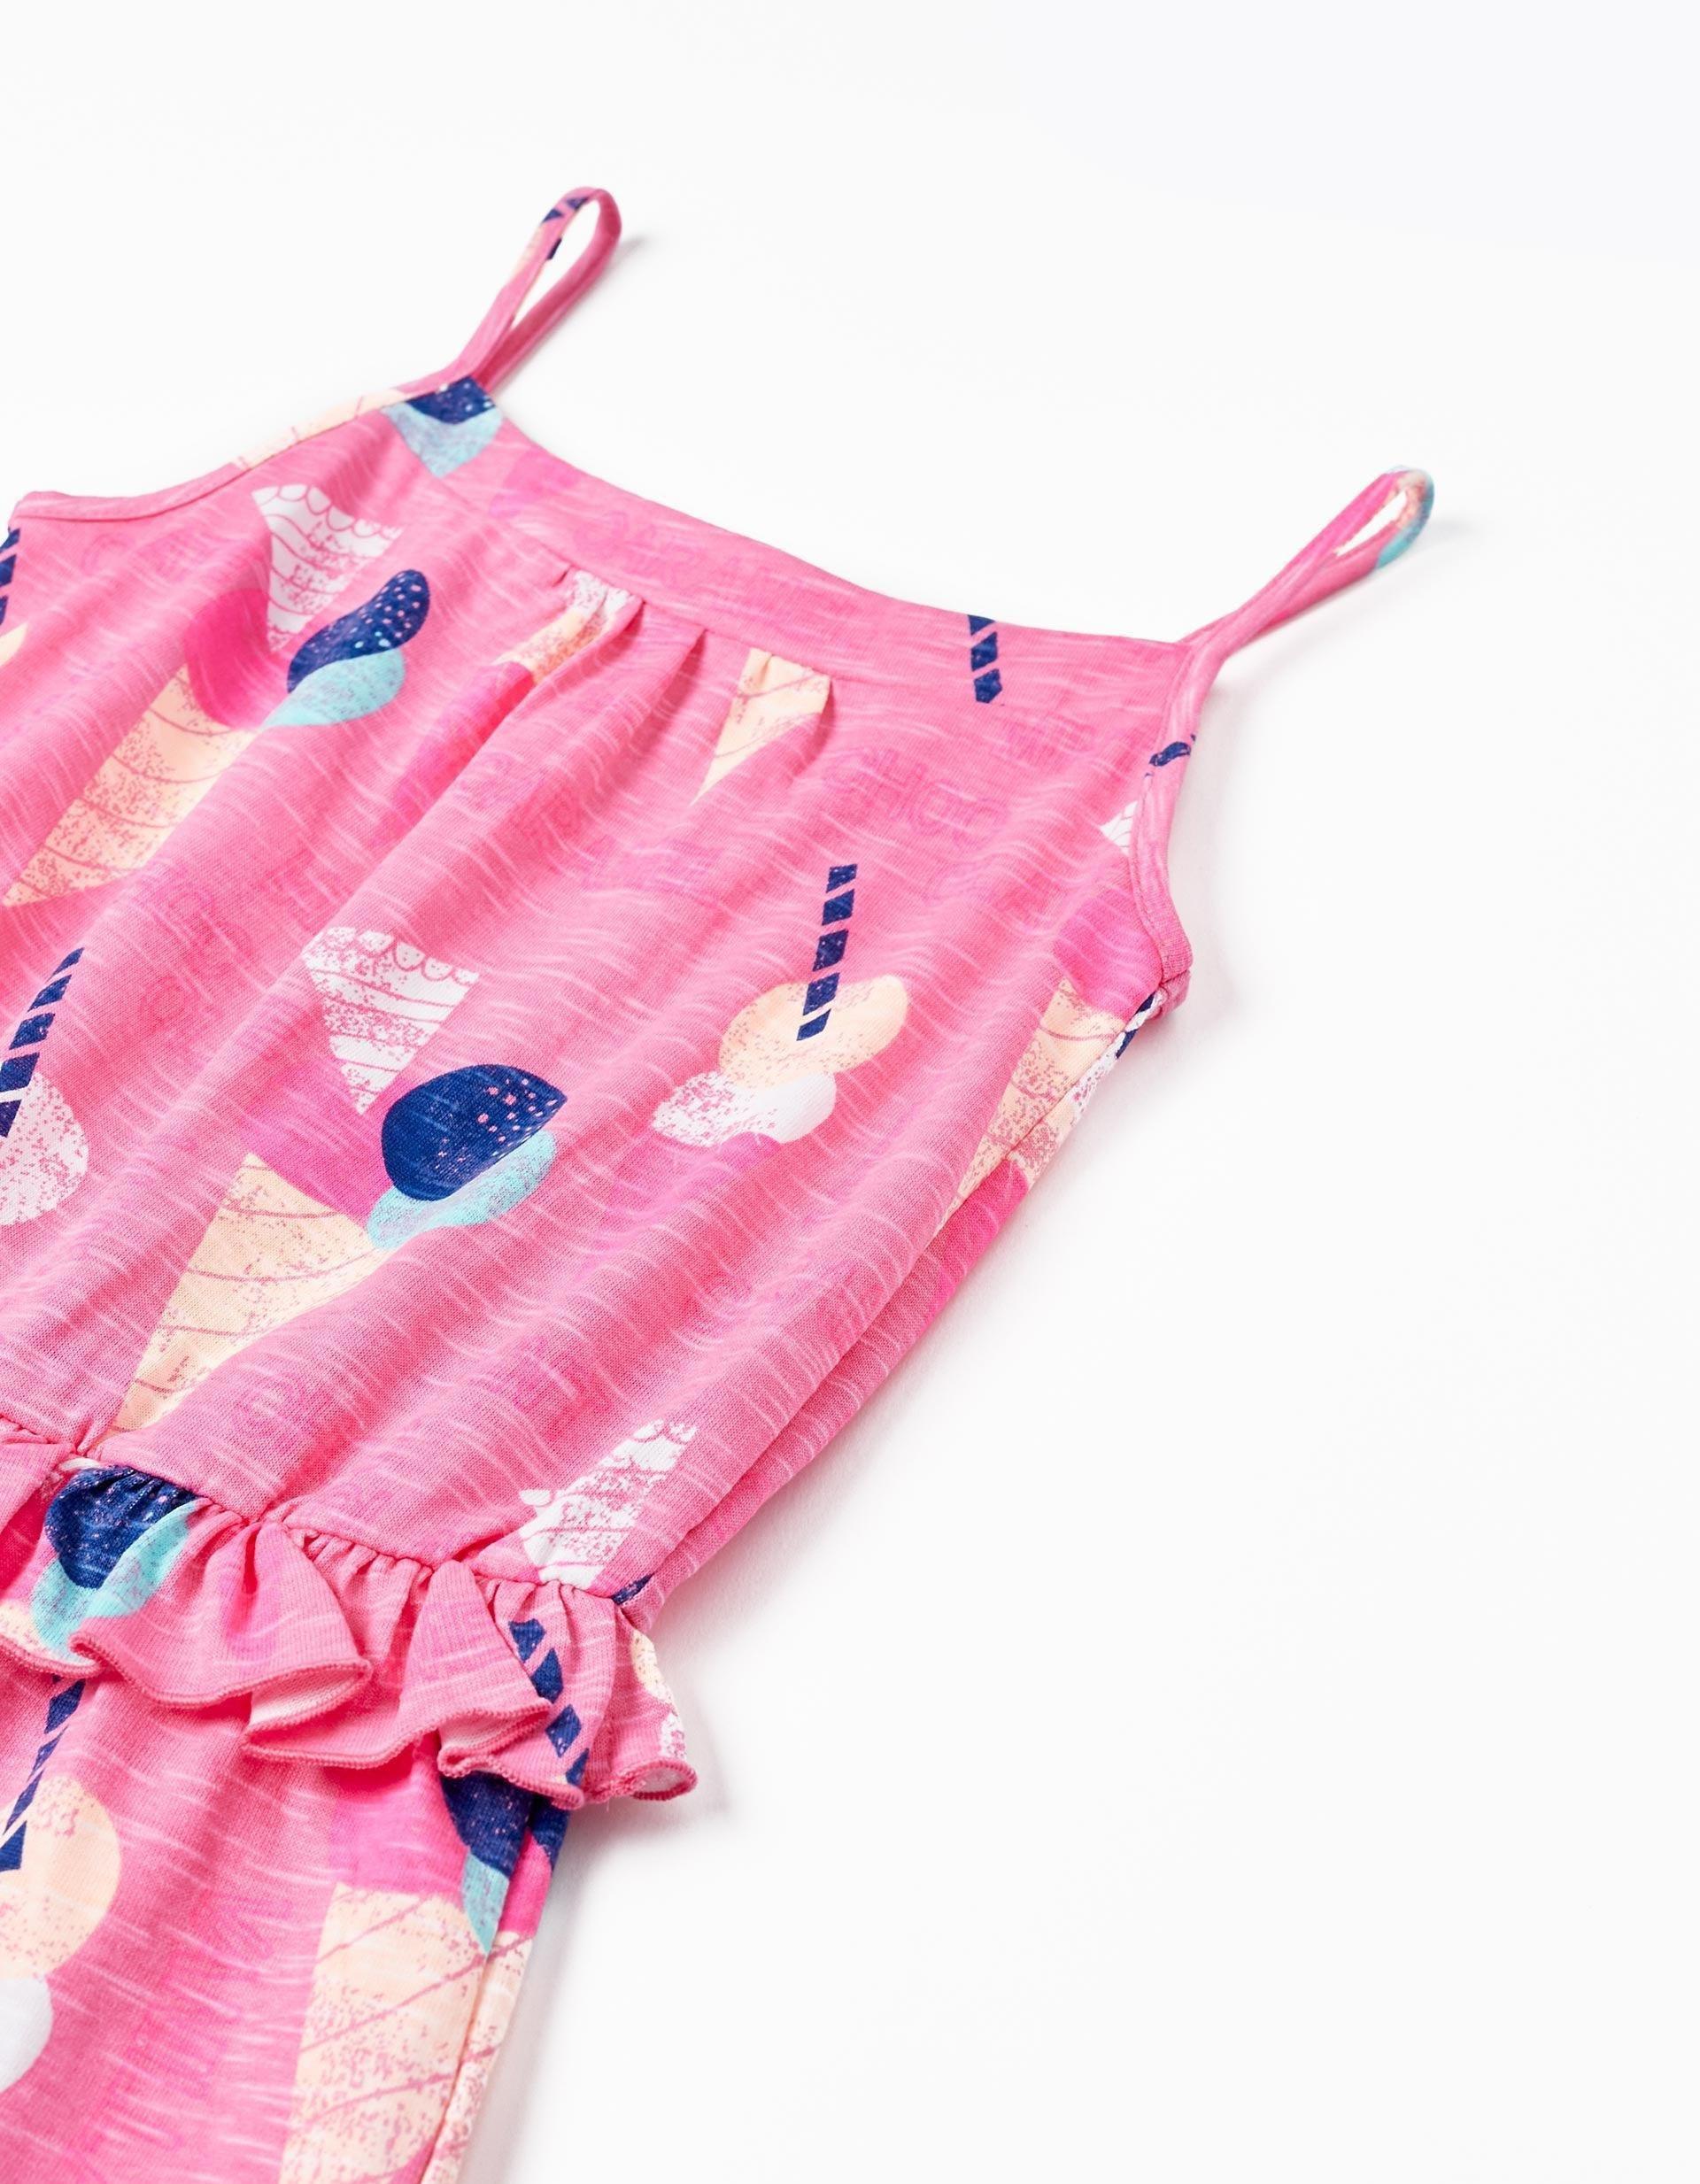 Zippy - Pink Printed Cotton Jumpsuit, Kids Girls